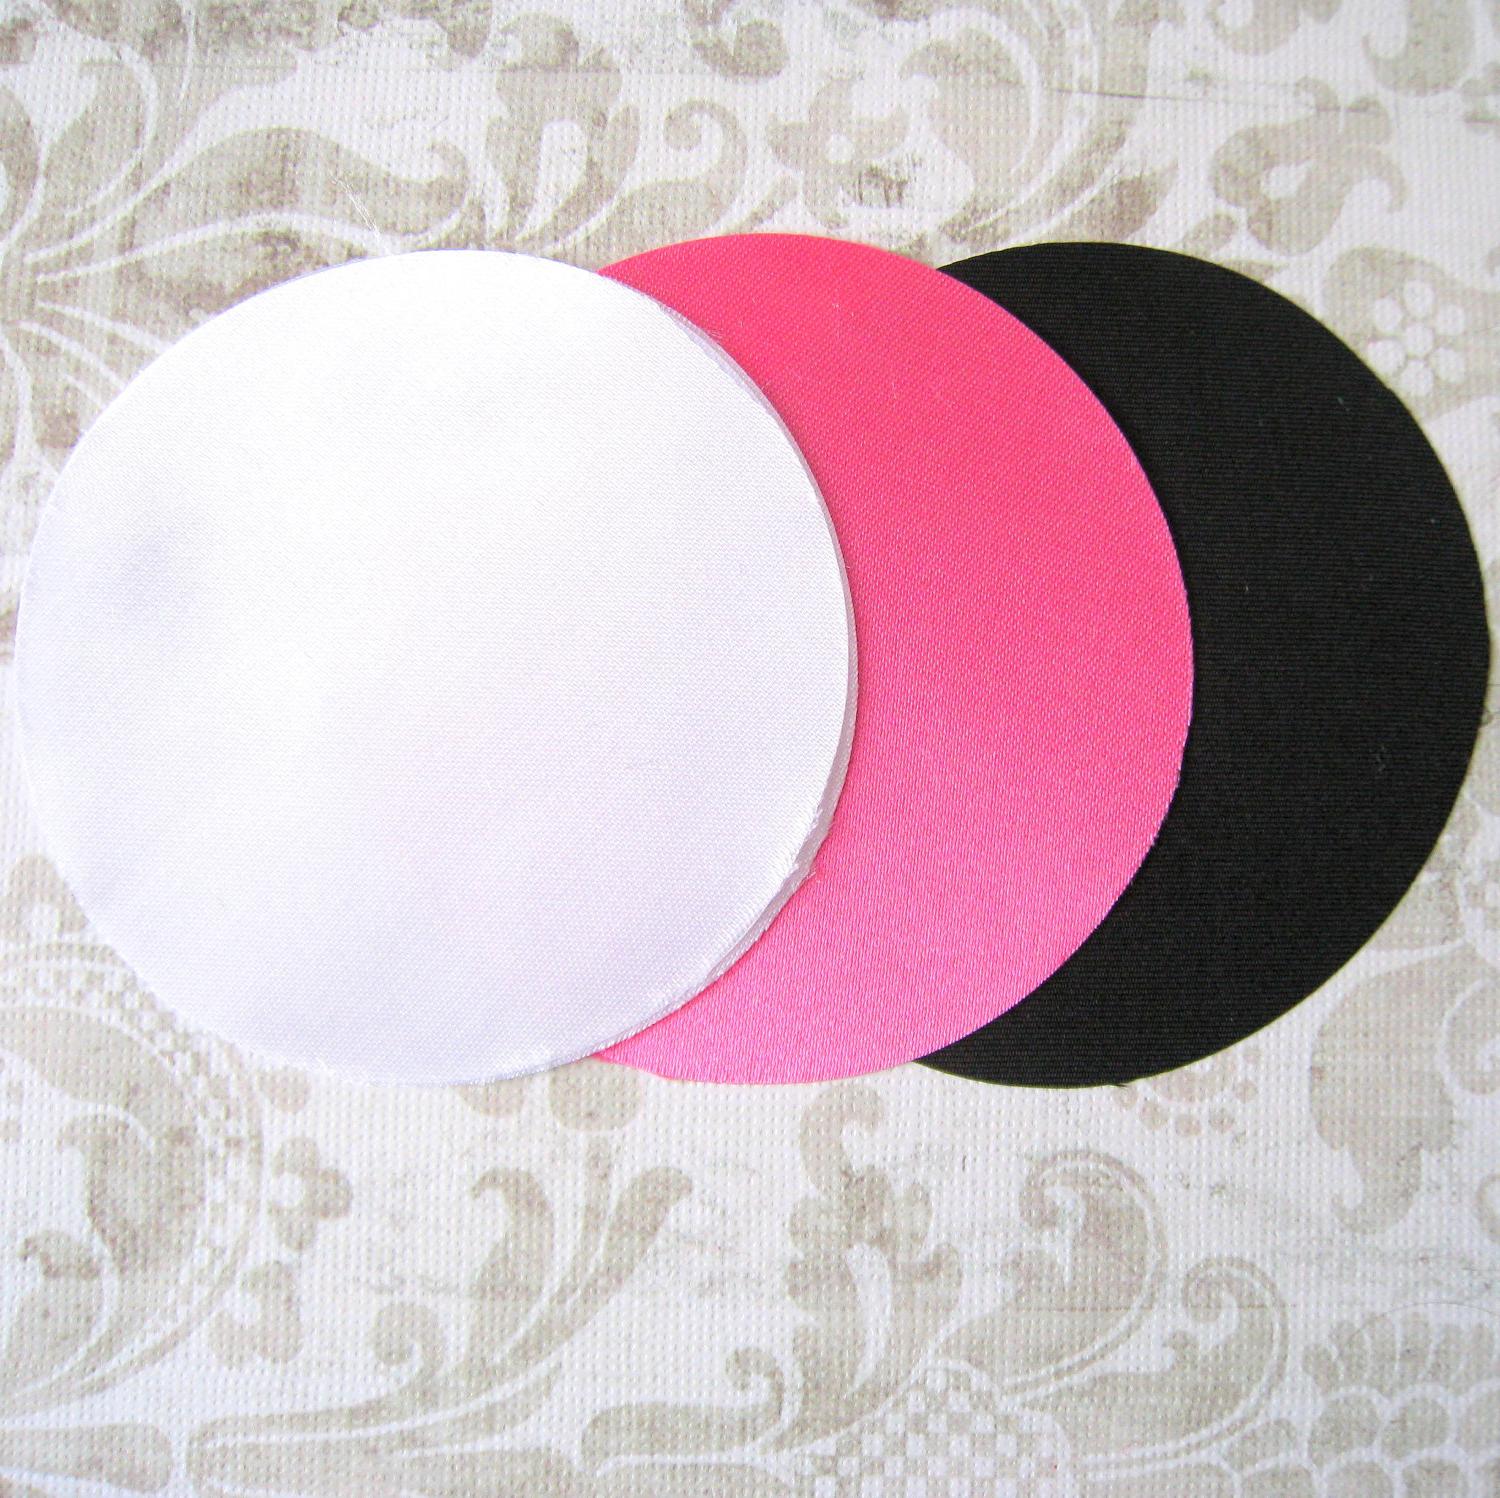 99 pcs 3 inches Hand cut Fabric Circles - White, Magenta Pink,